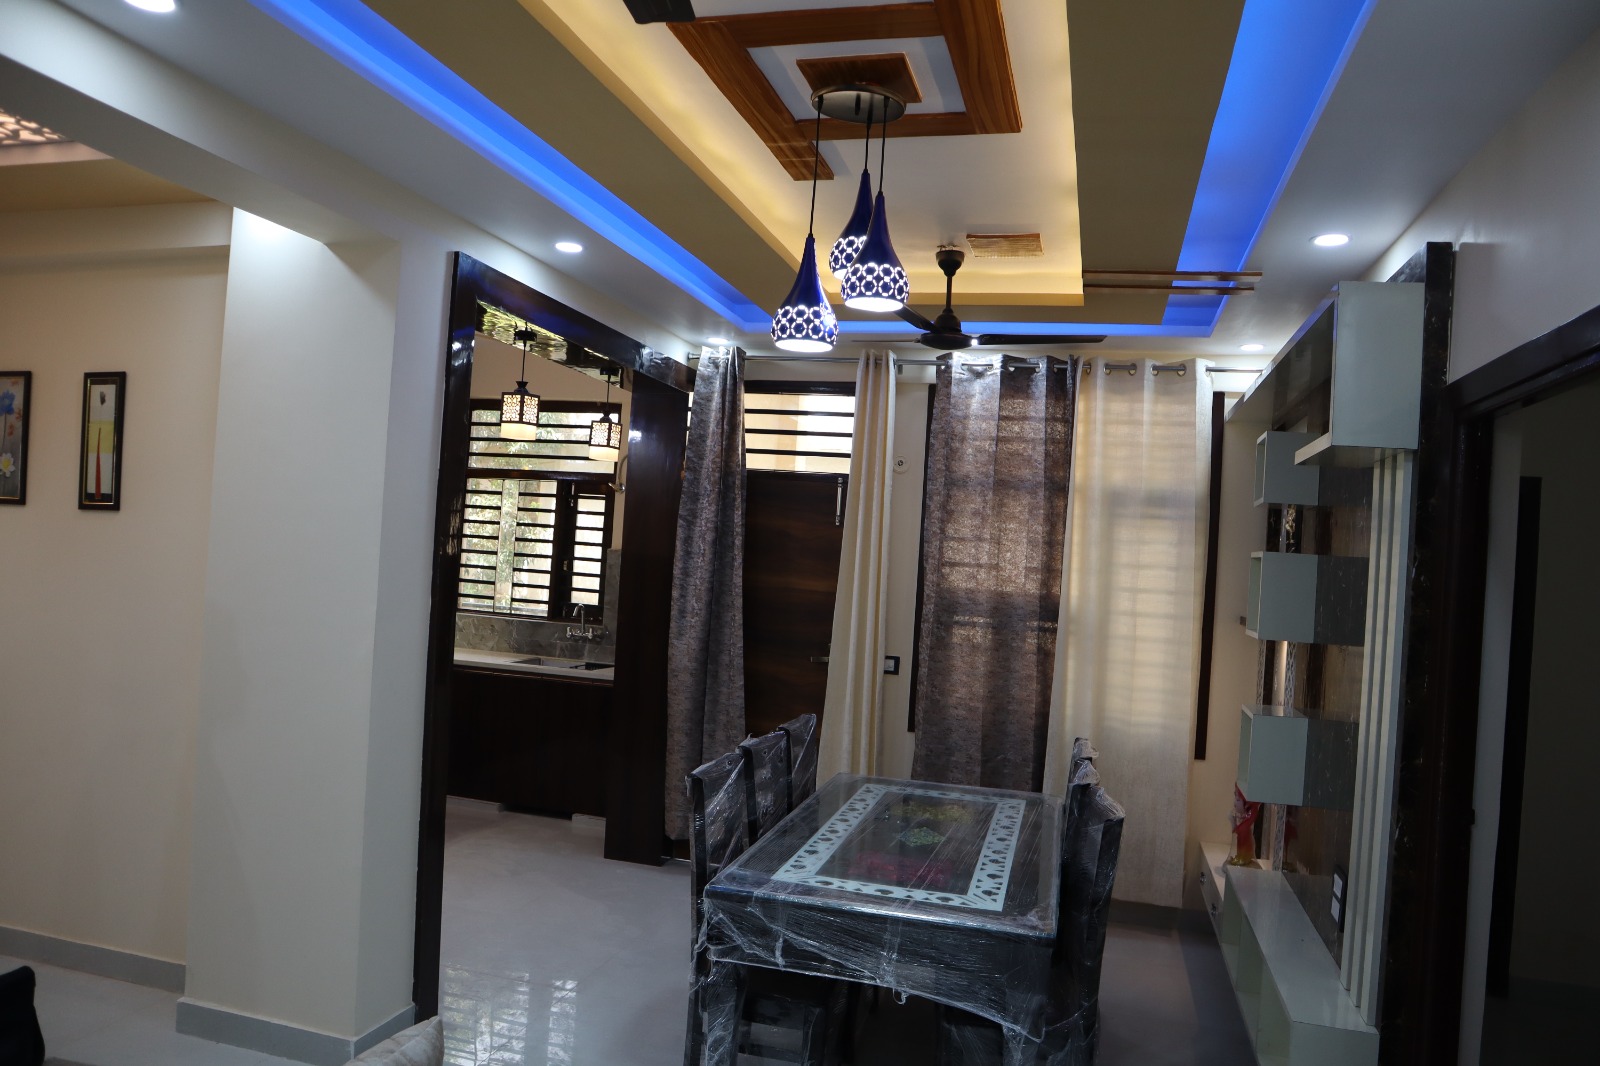 3 Bedroom Apartment For Sale in Swati apartment , Meerut